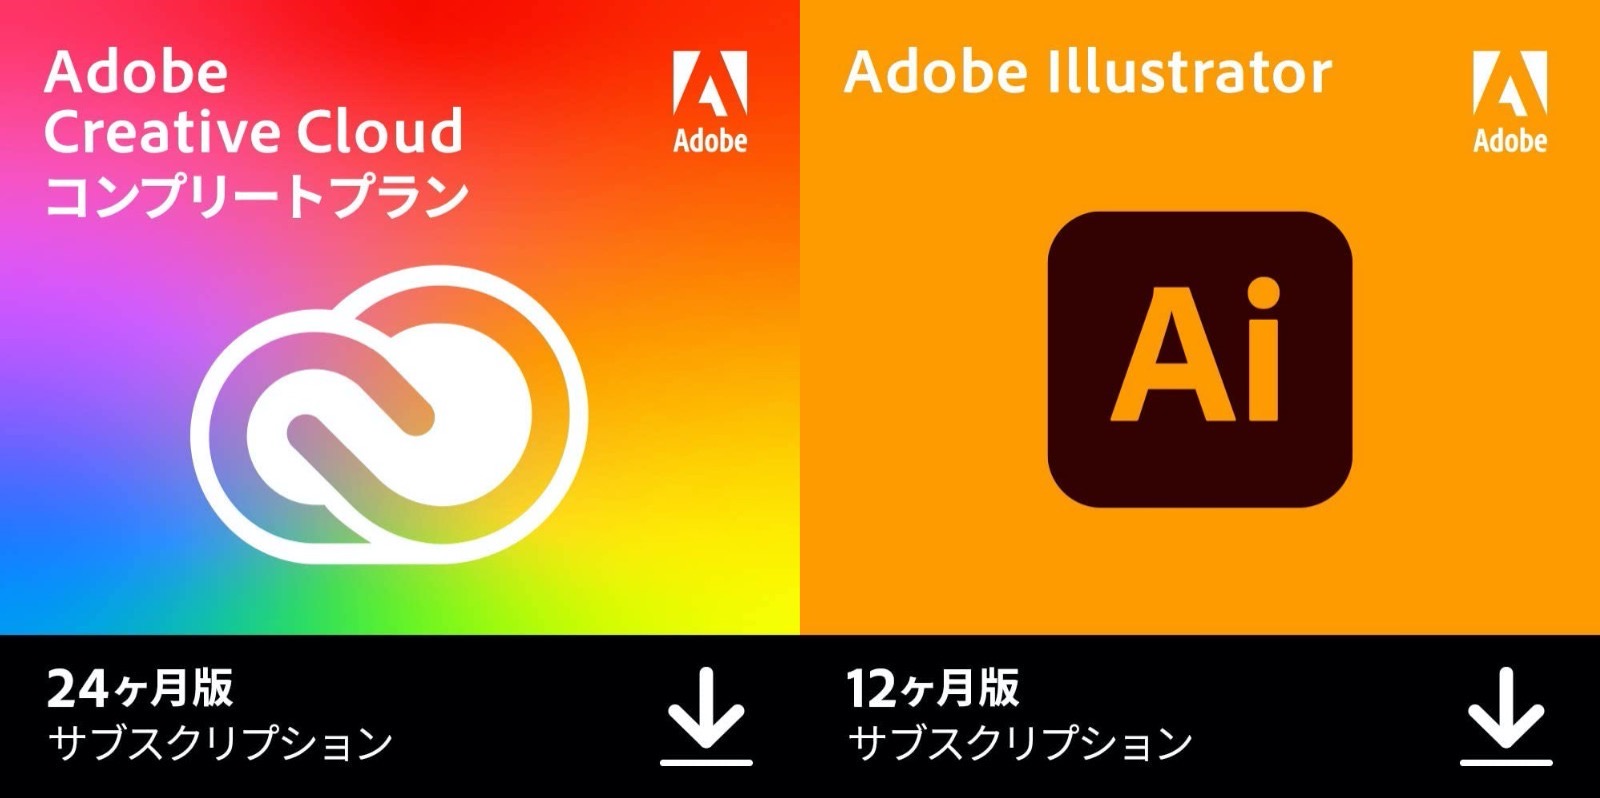 Adobe CC mega sale